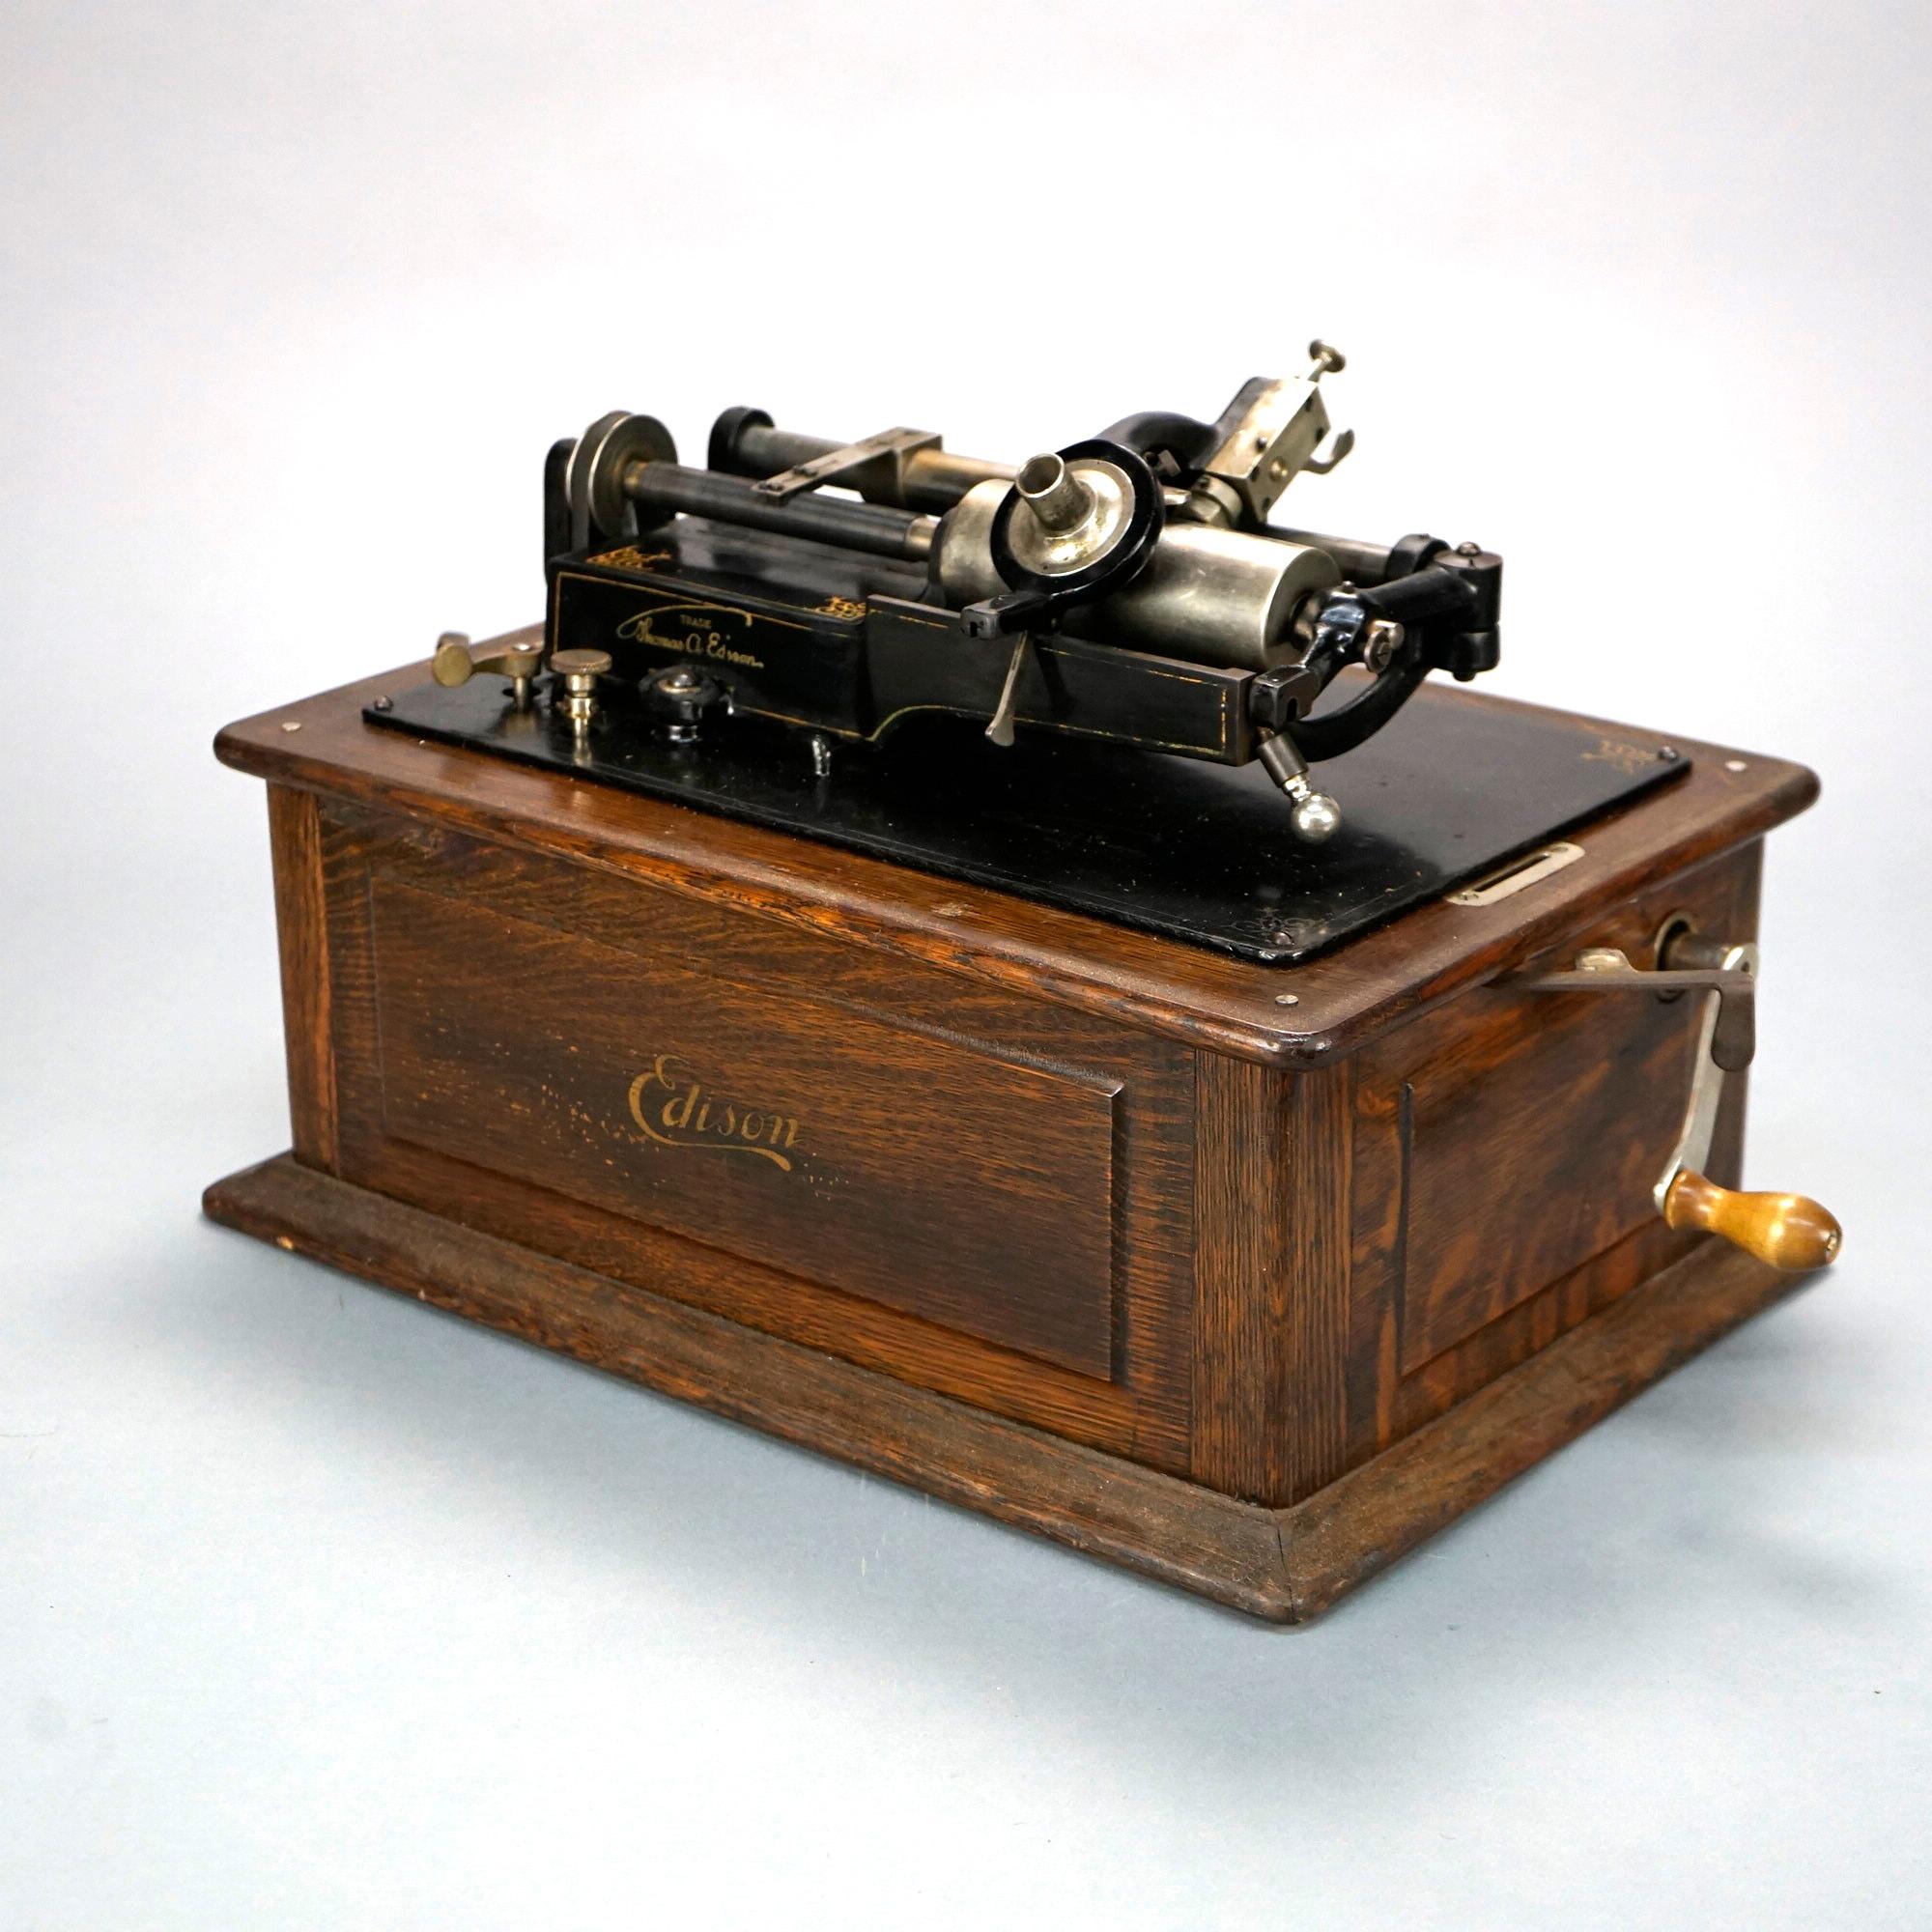 20th Century Antique Edison Triumph Cylinder Phonograph with Oak Case Circa 1900